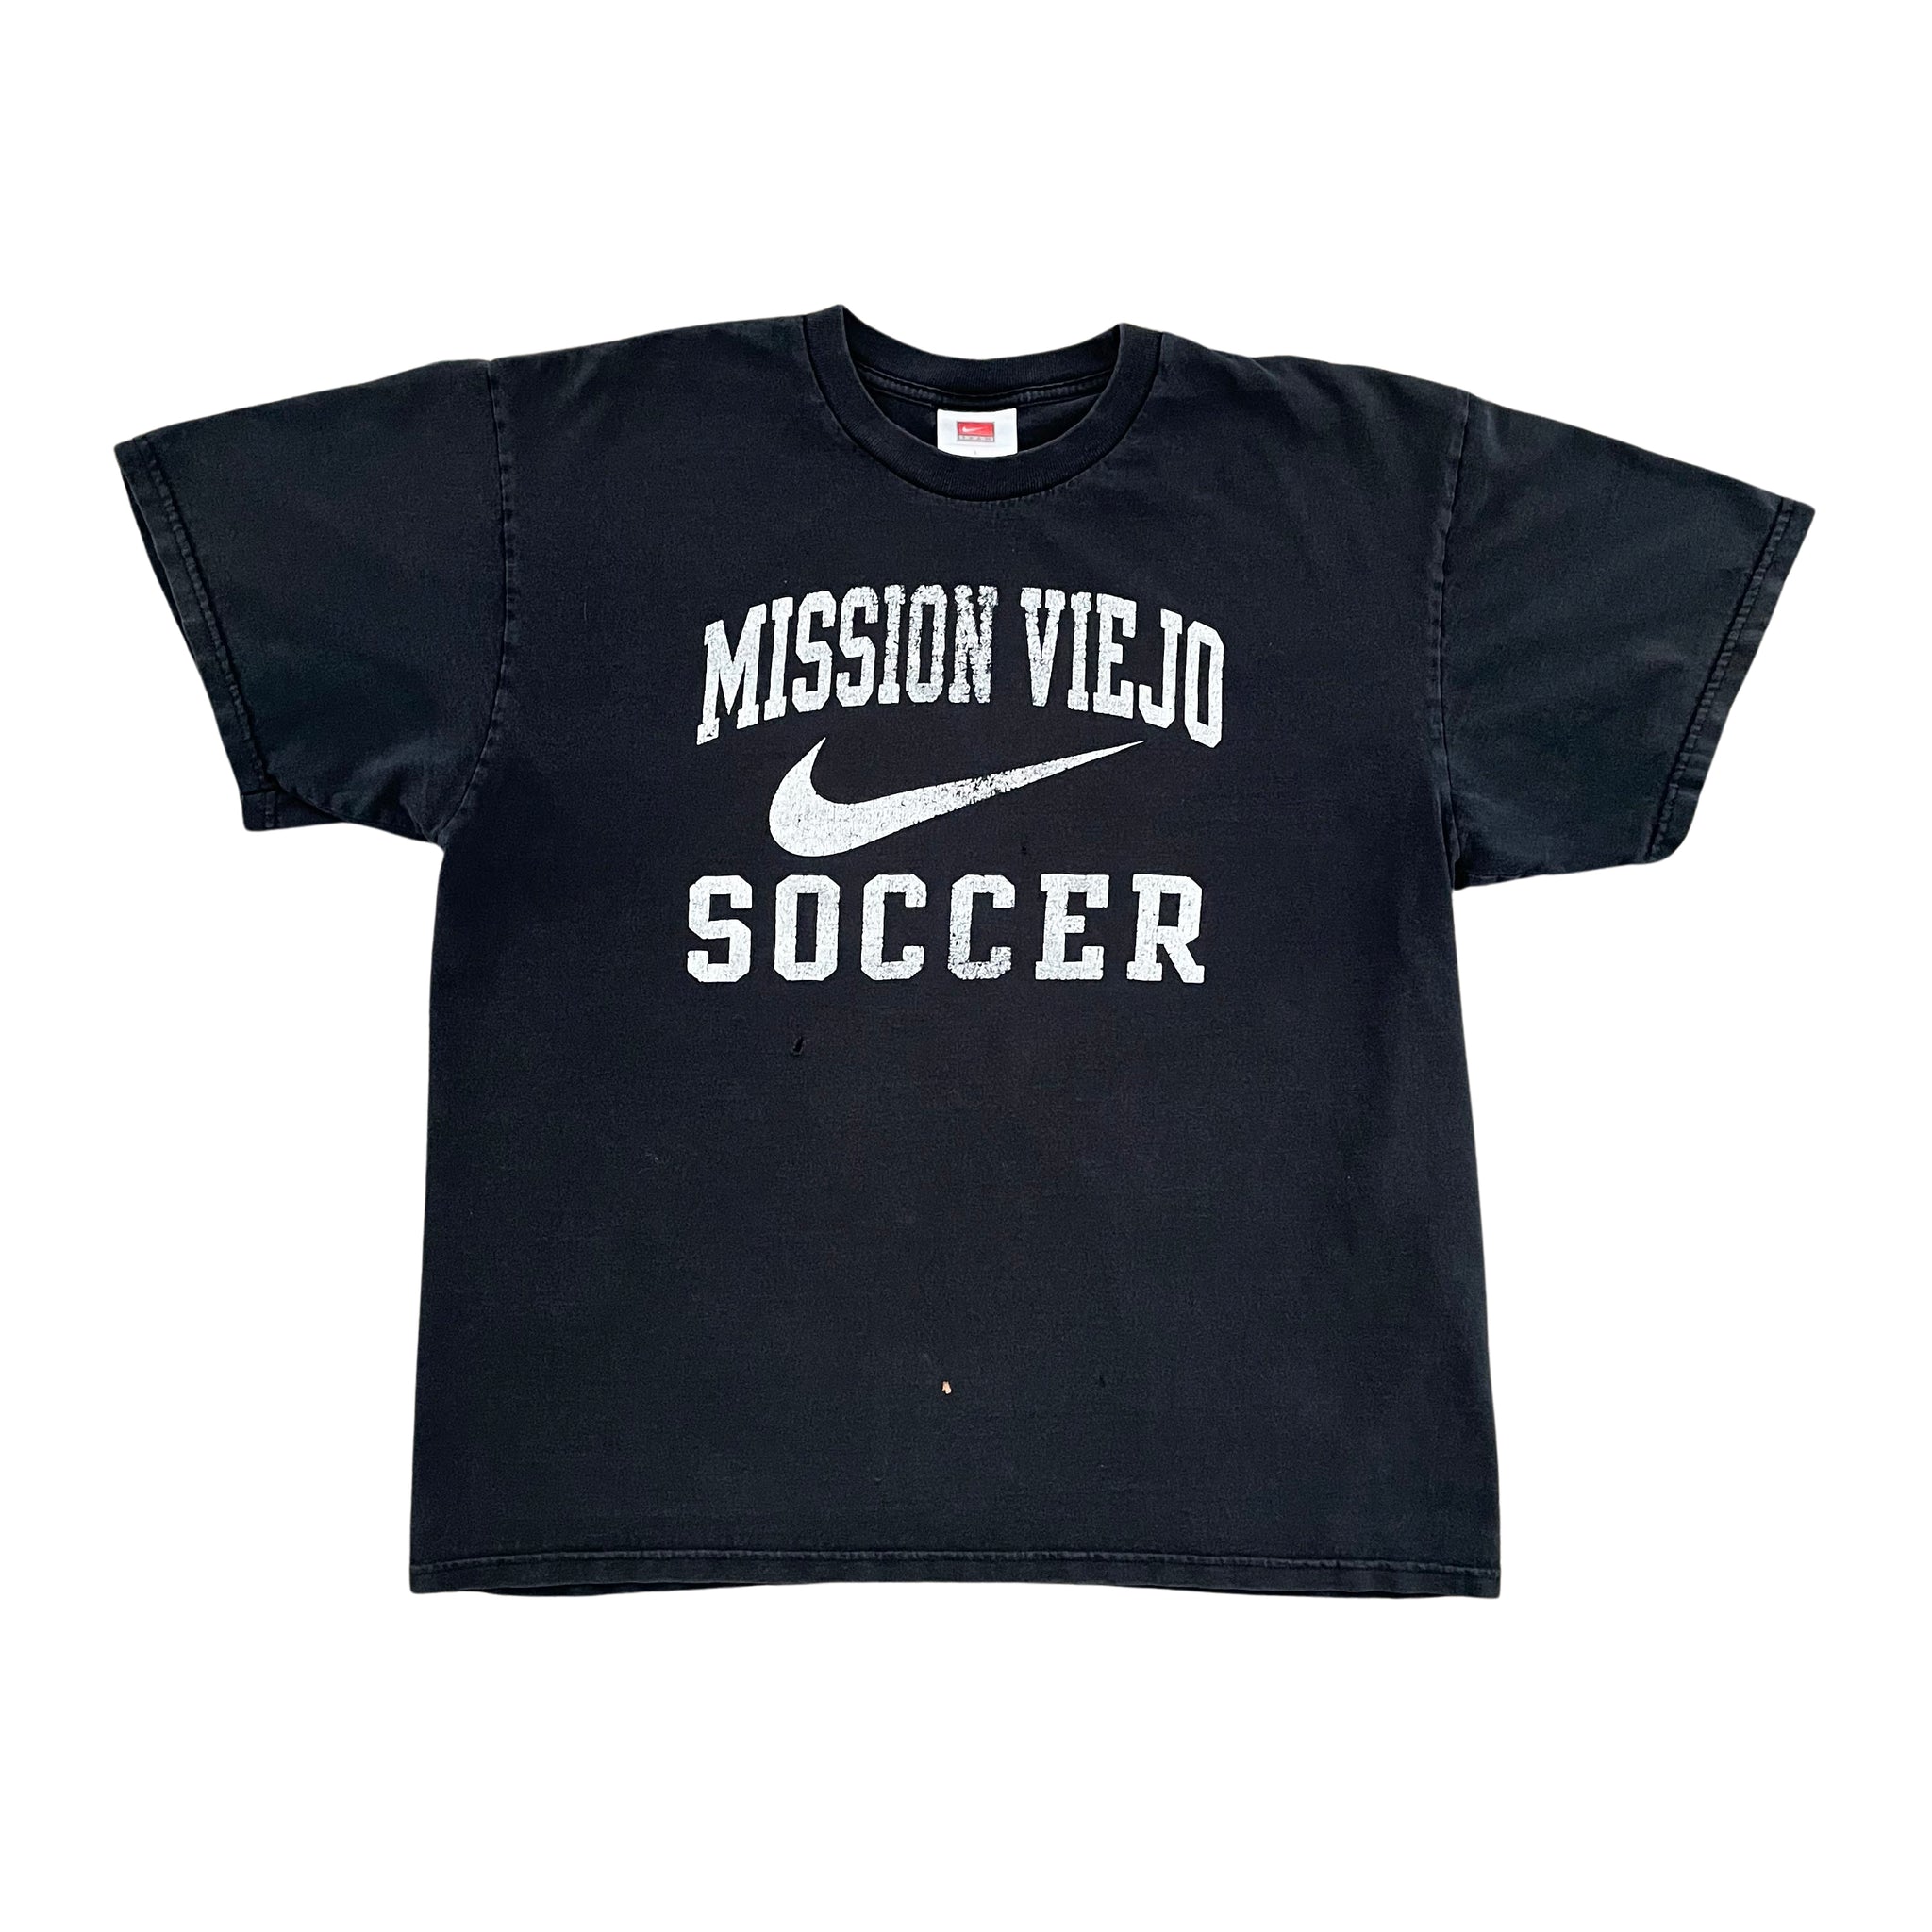 Nike Mission Viejo Soccer T-Shirt - L